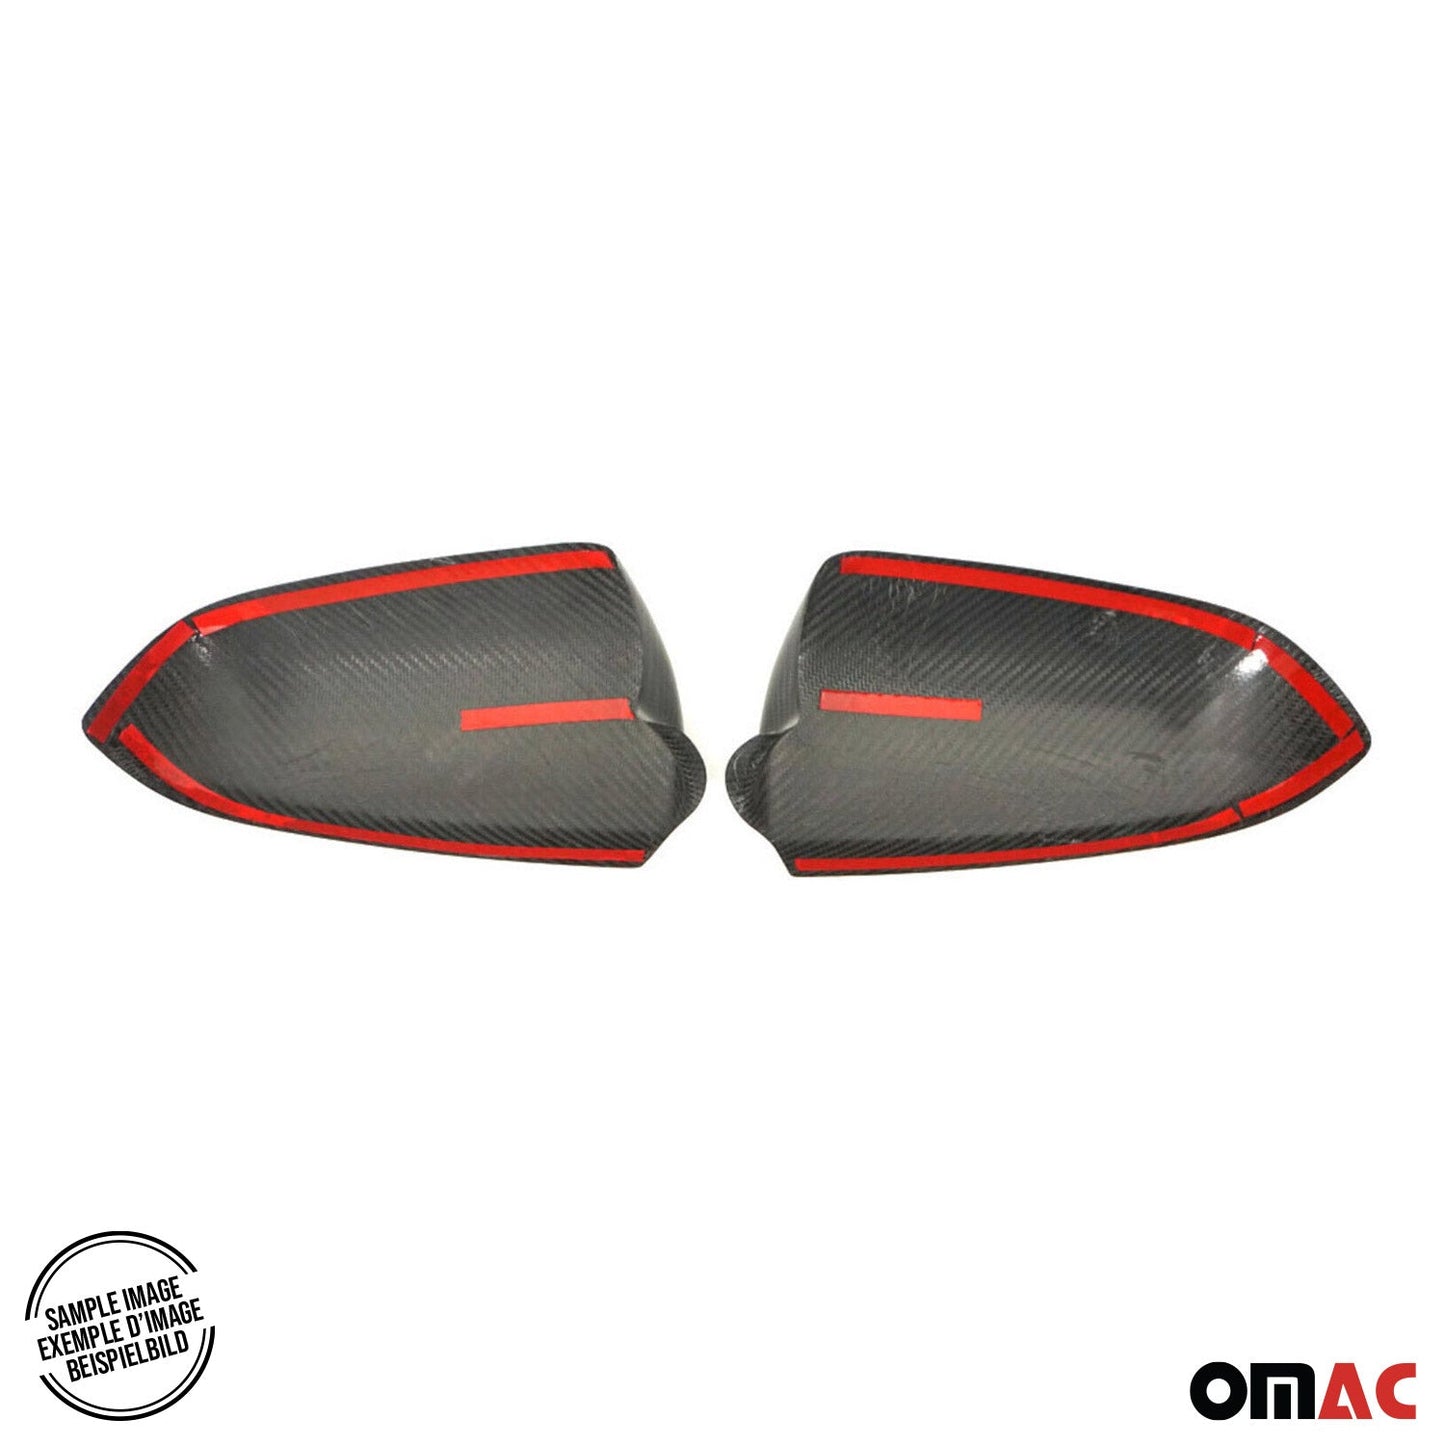 OMAC Fits BMW X1 E84 2013-2015 Genuine Carbon Fiber Side Mirror Cover Cap 2 Pcs U003400